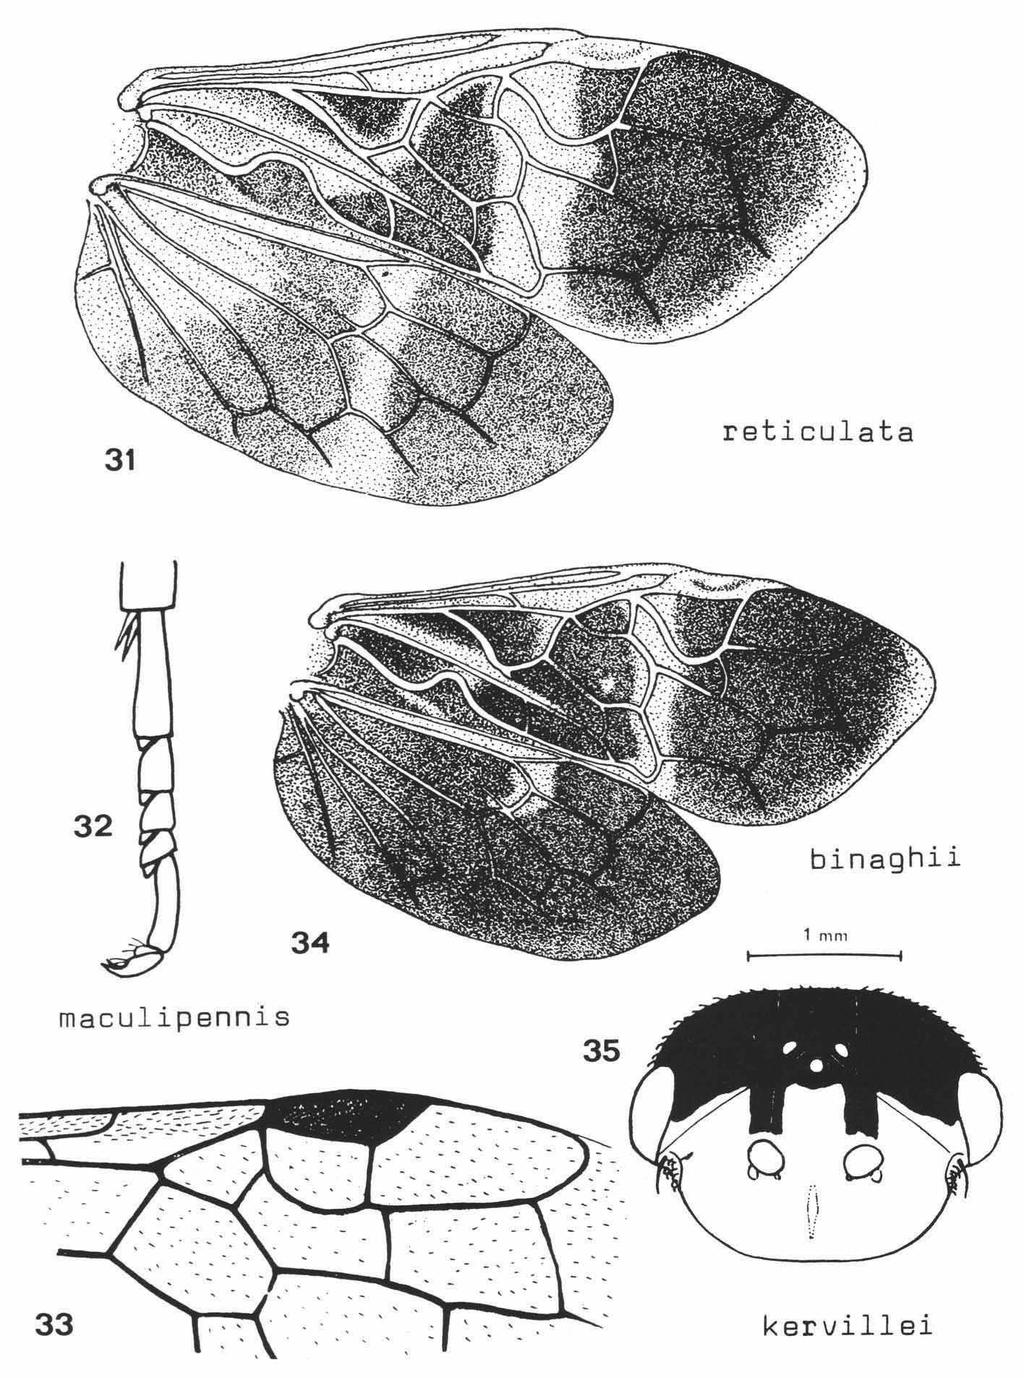 58 ZOOLOGISCHE VERHANDELINGEN 234 (1986) Fig. 31. Caenolyda reticulata (Linnaeus), S, Germany, wings. Fig. 32. Kelidoptera maculipennis (Stein), 9, Turkey, hind tarsus. Figs. 33, 35.